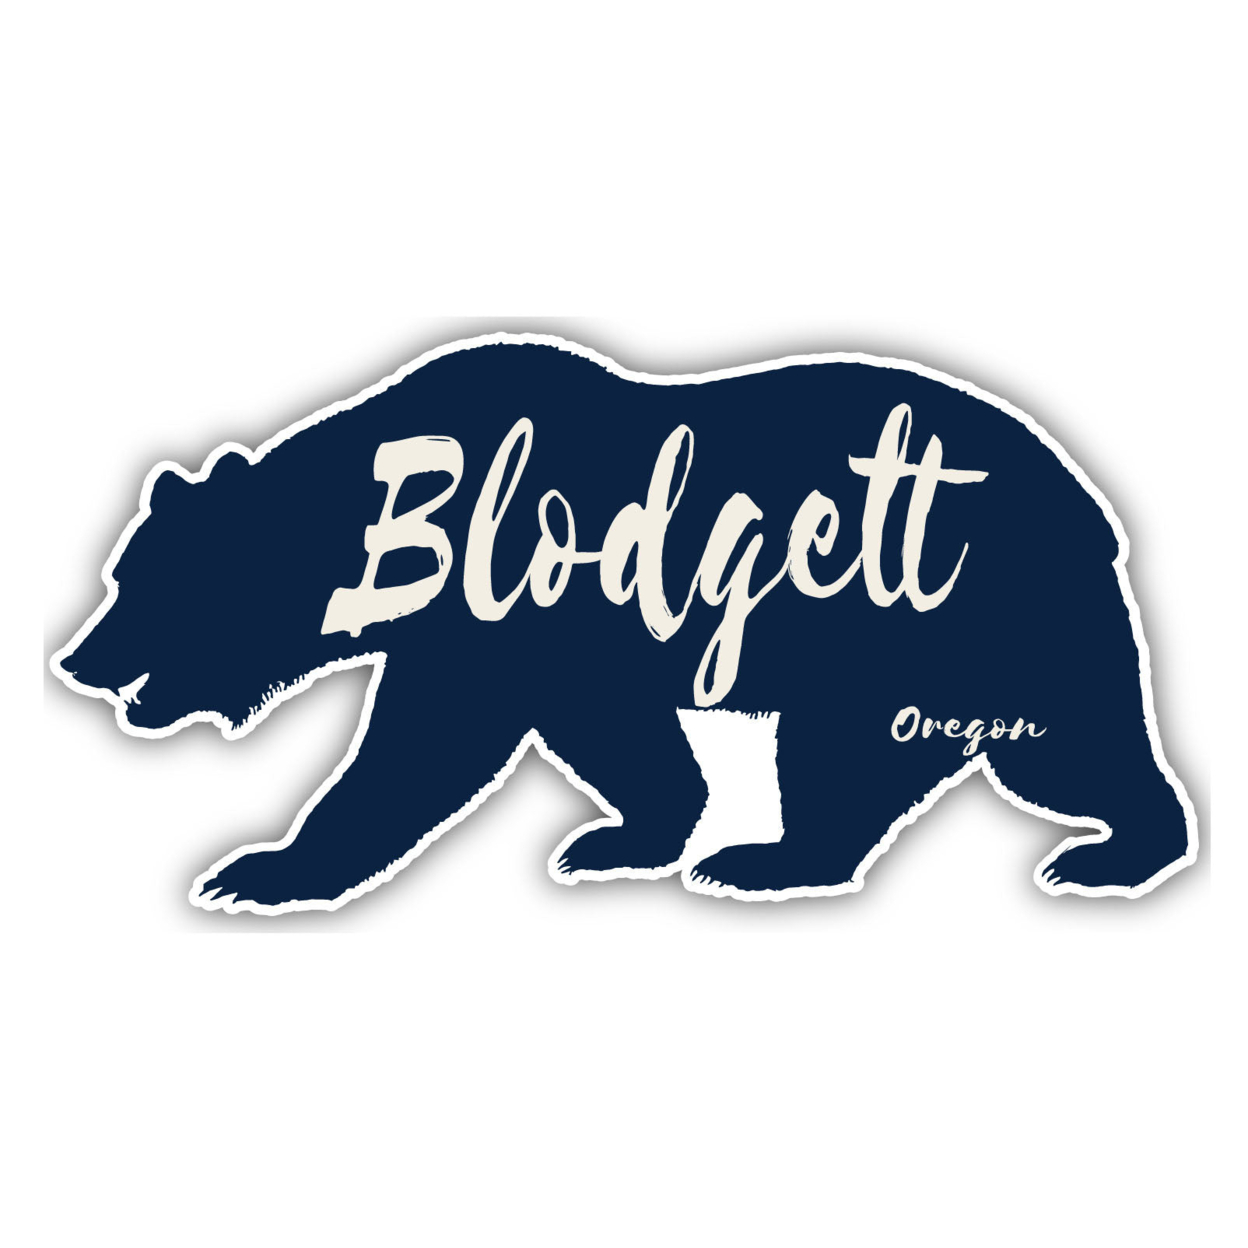 Blodgett Oregon Souvenir Decorative Stickers (Choose Theme And Size) - Single Unit, 6-Inch, Bear